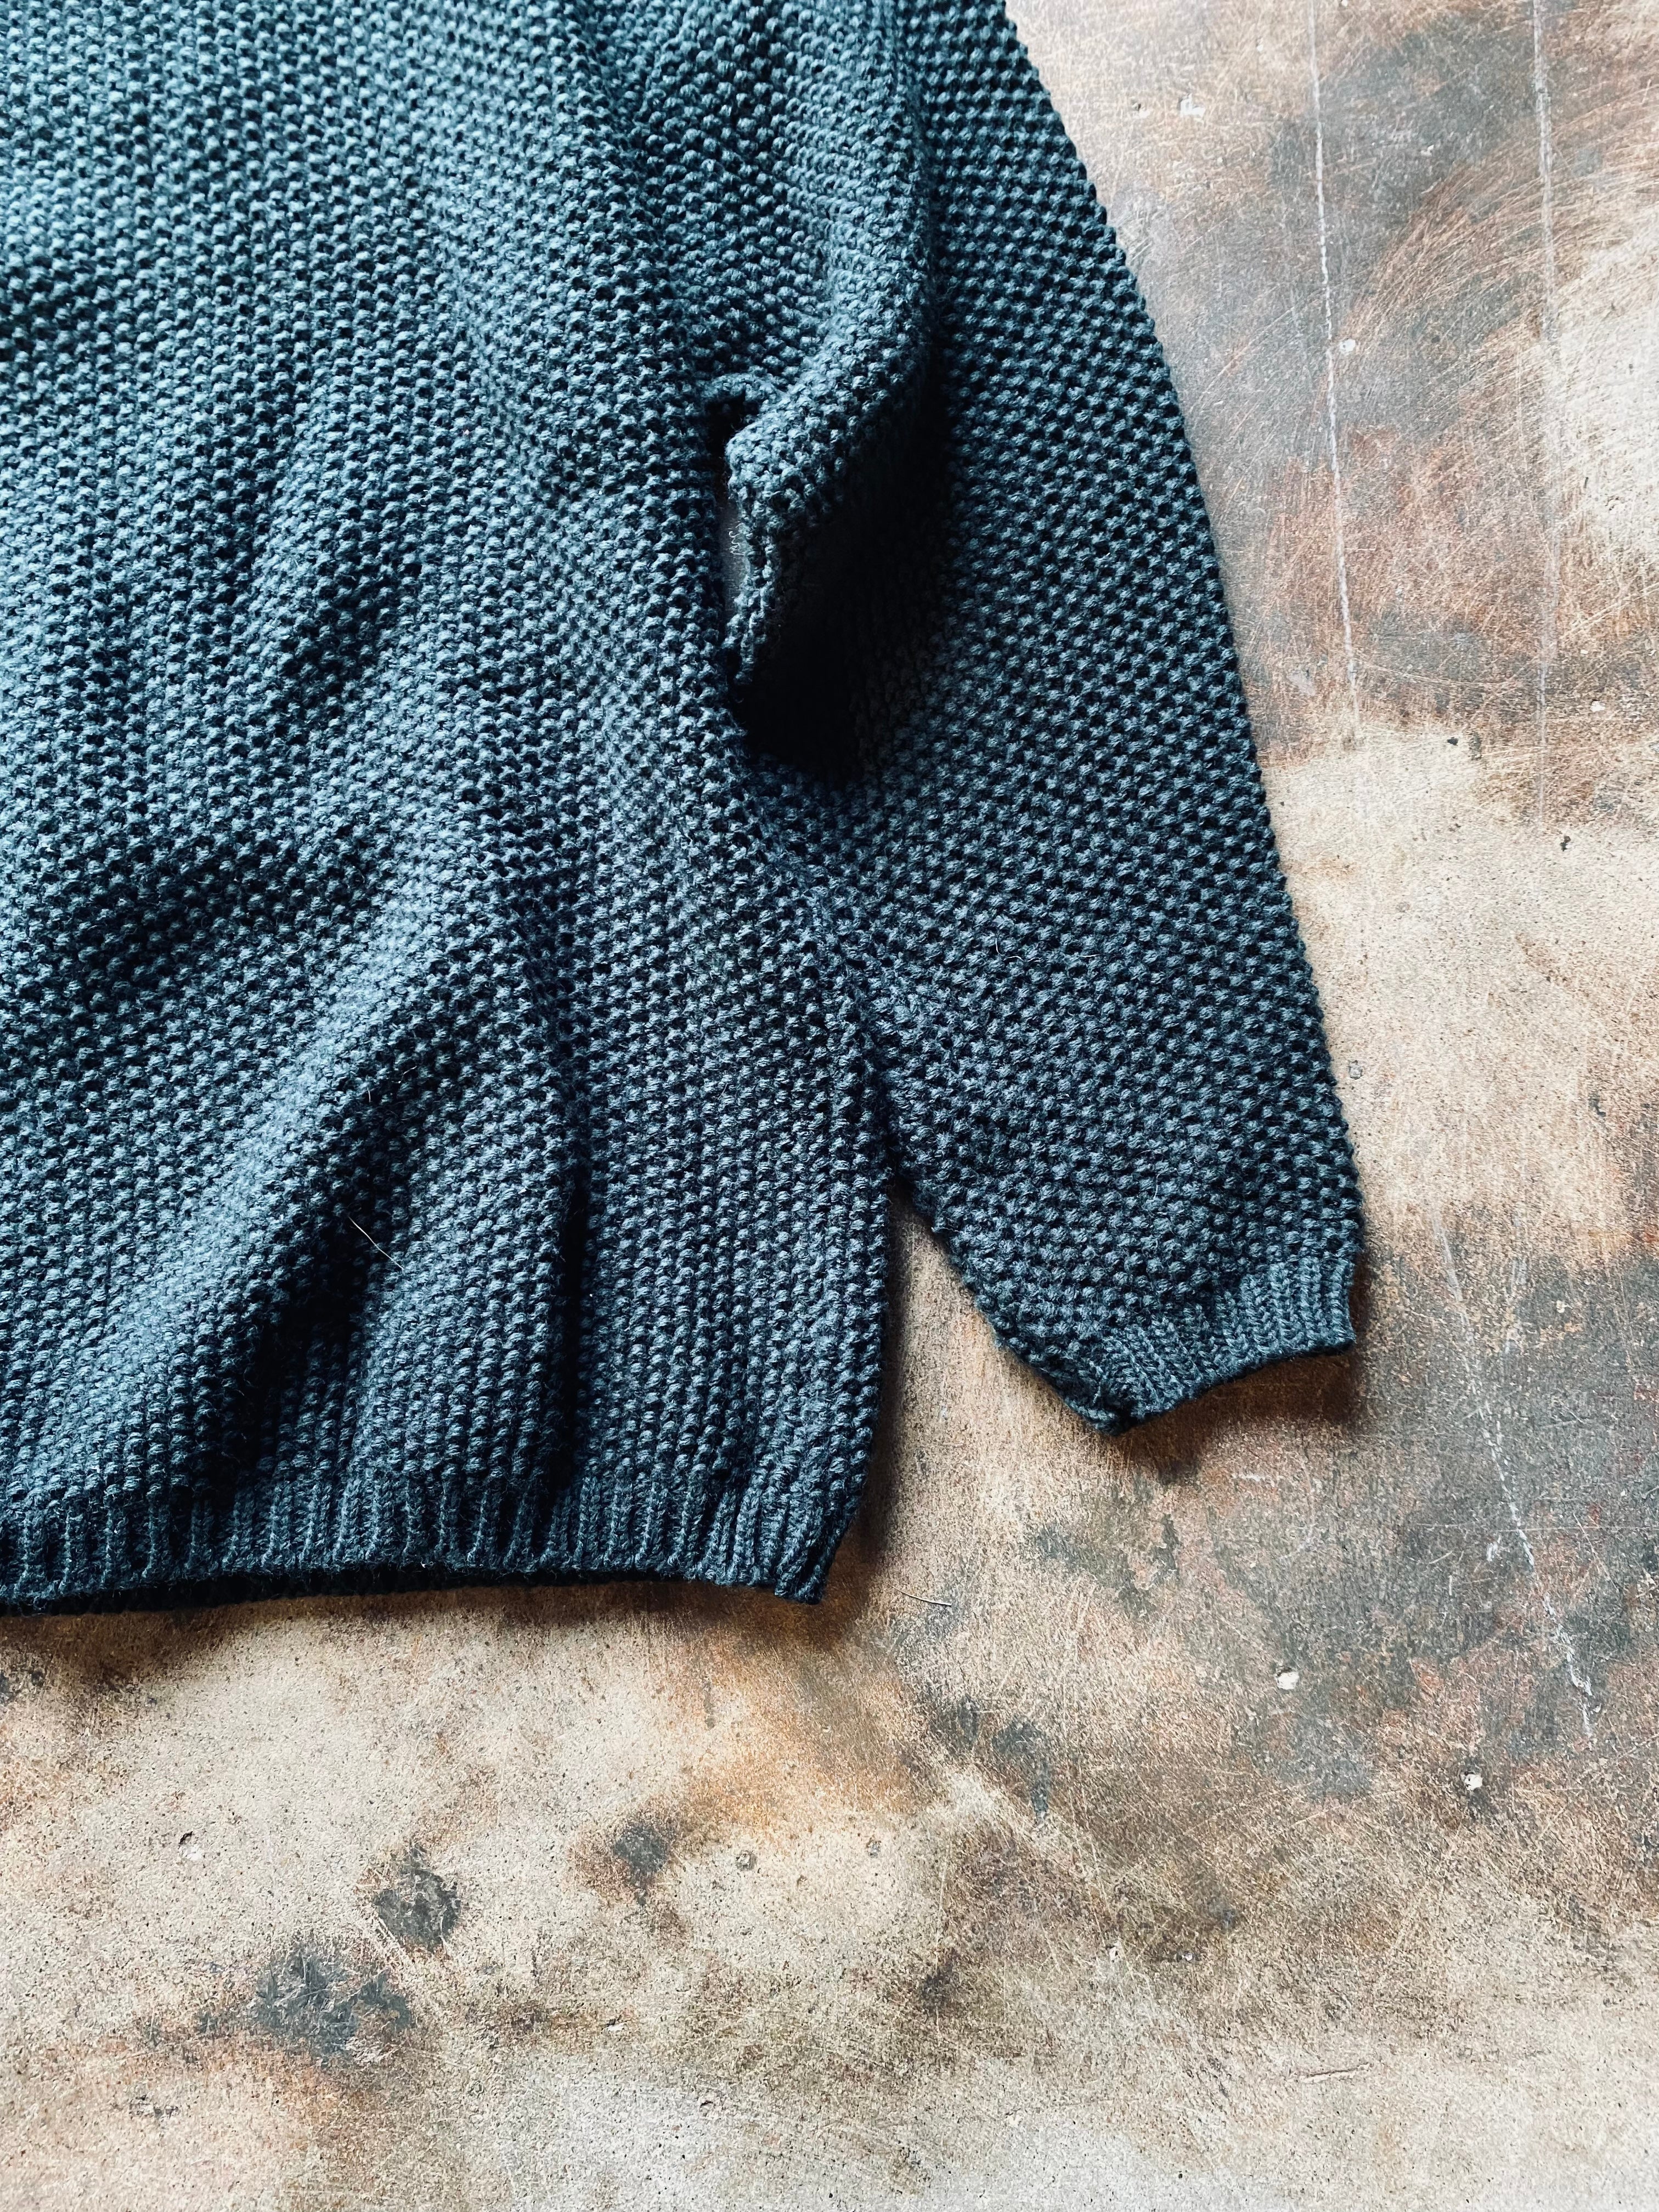 1980s Huntington Ridge Loose Knit Sweater